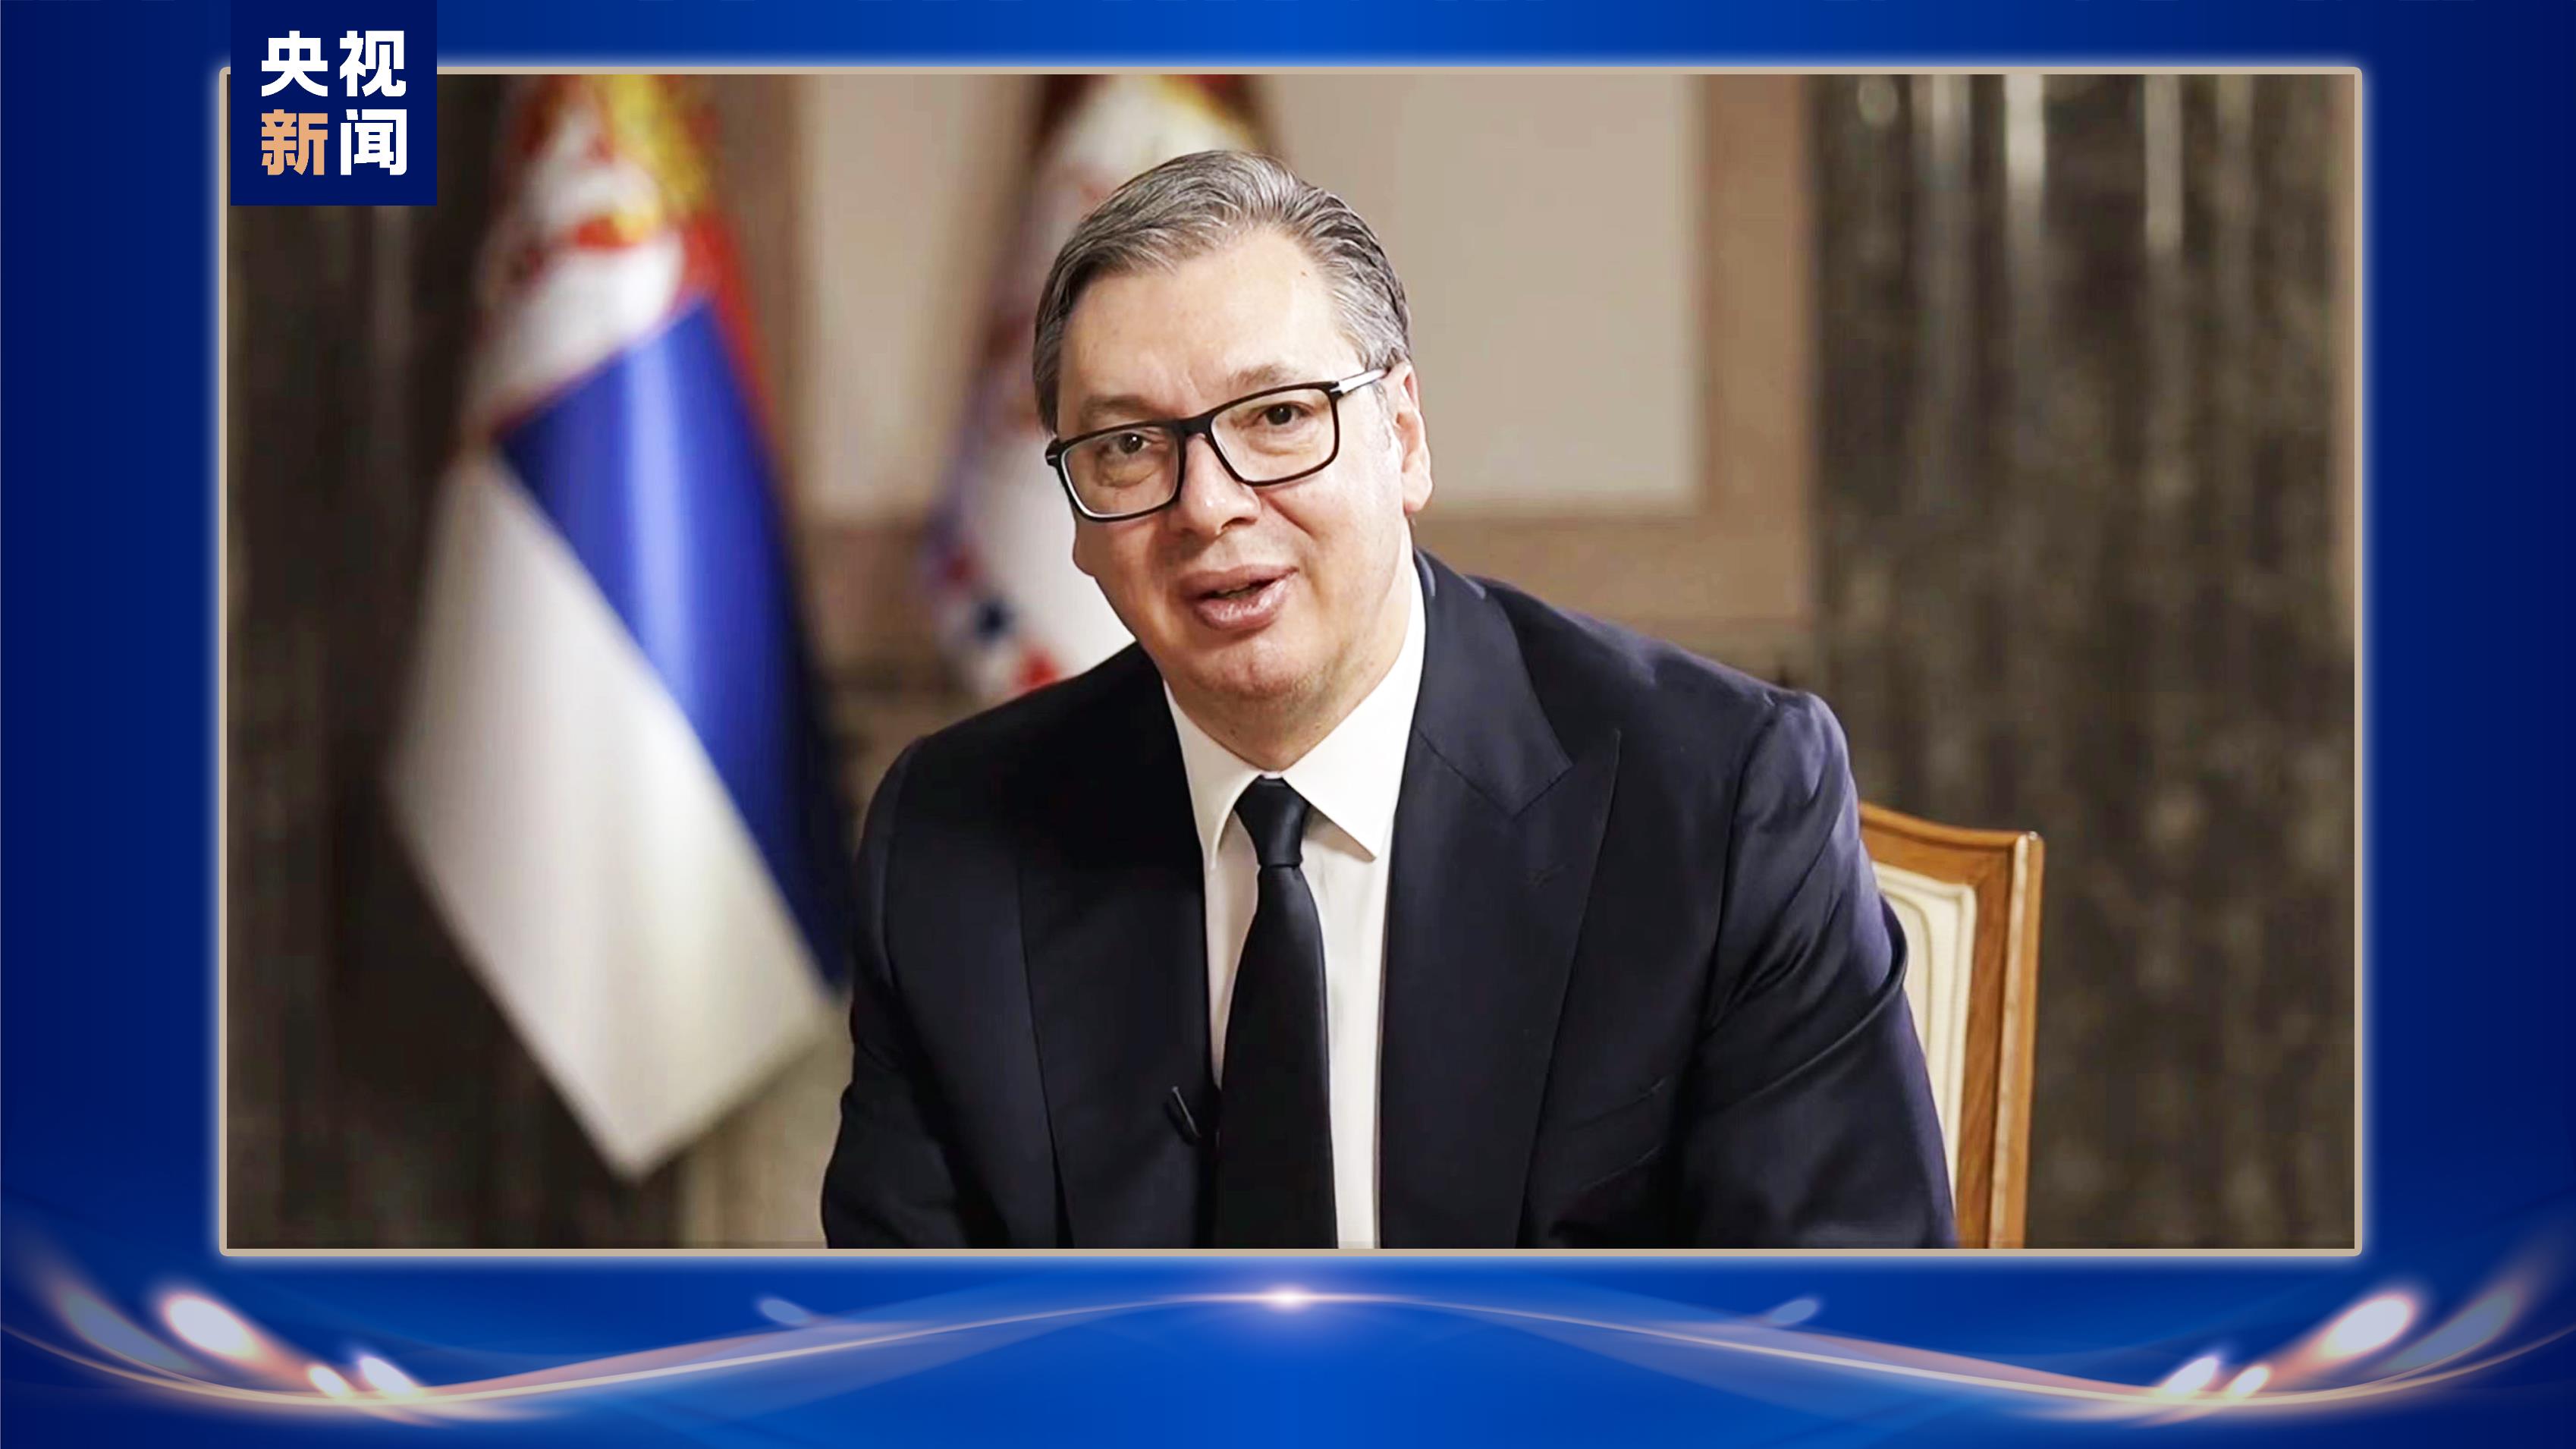 Serbian President Aleksandar Vucic commends the broadcast of 